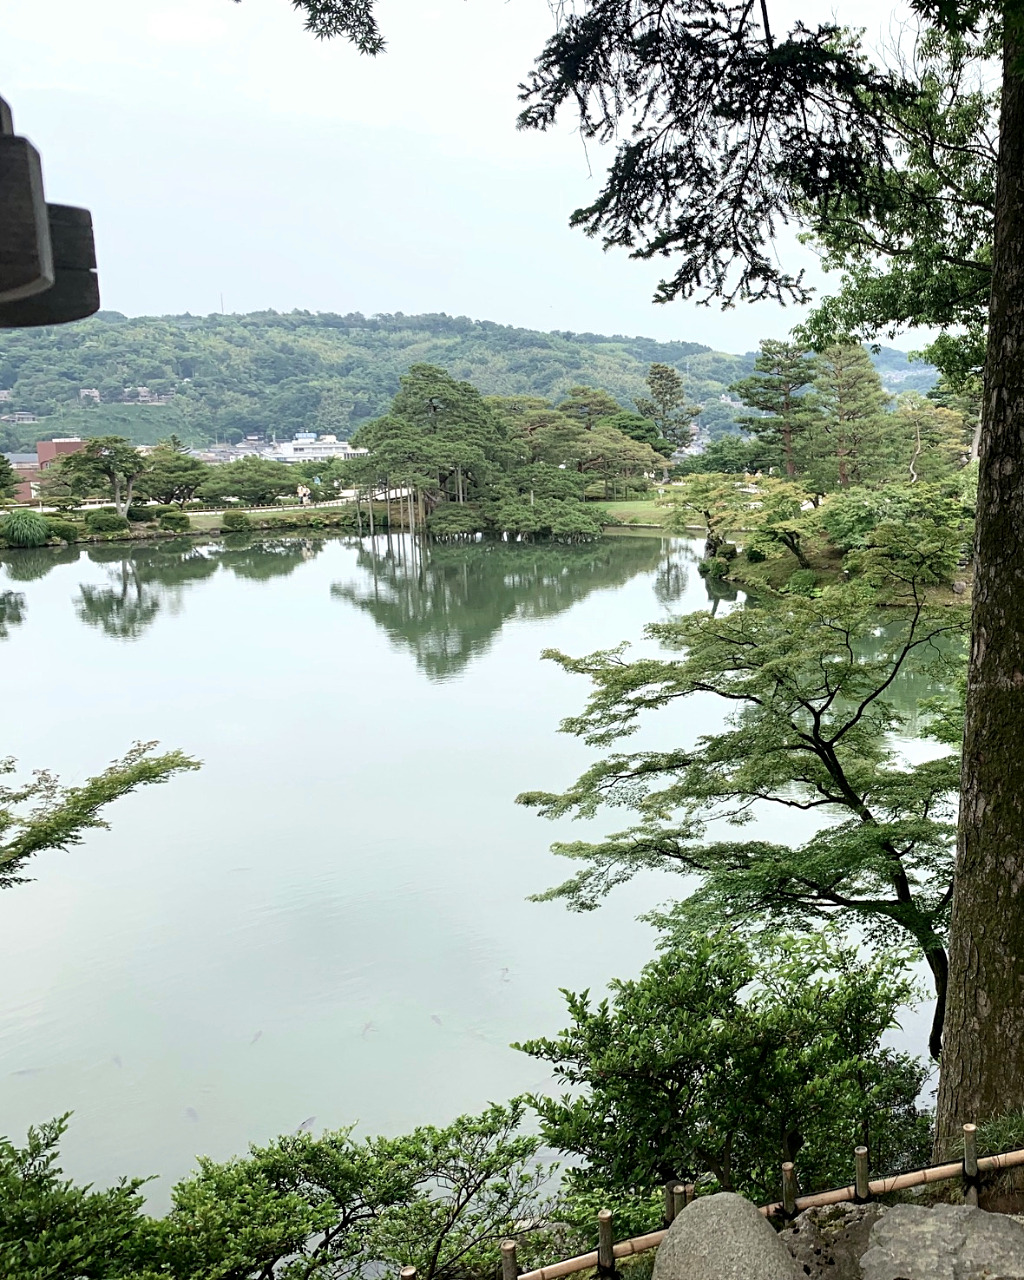 Kasumi ga Ike Pond at Kenrokuen Kanazawa